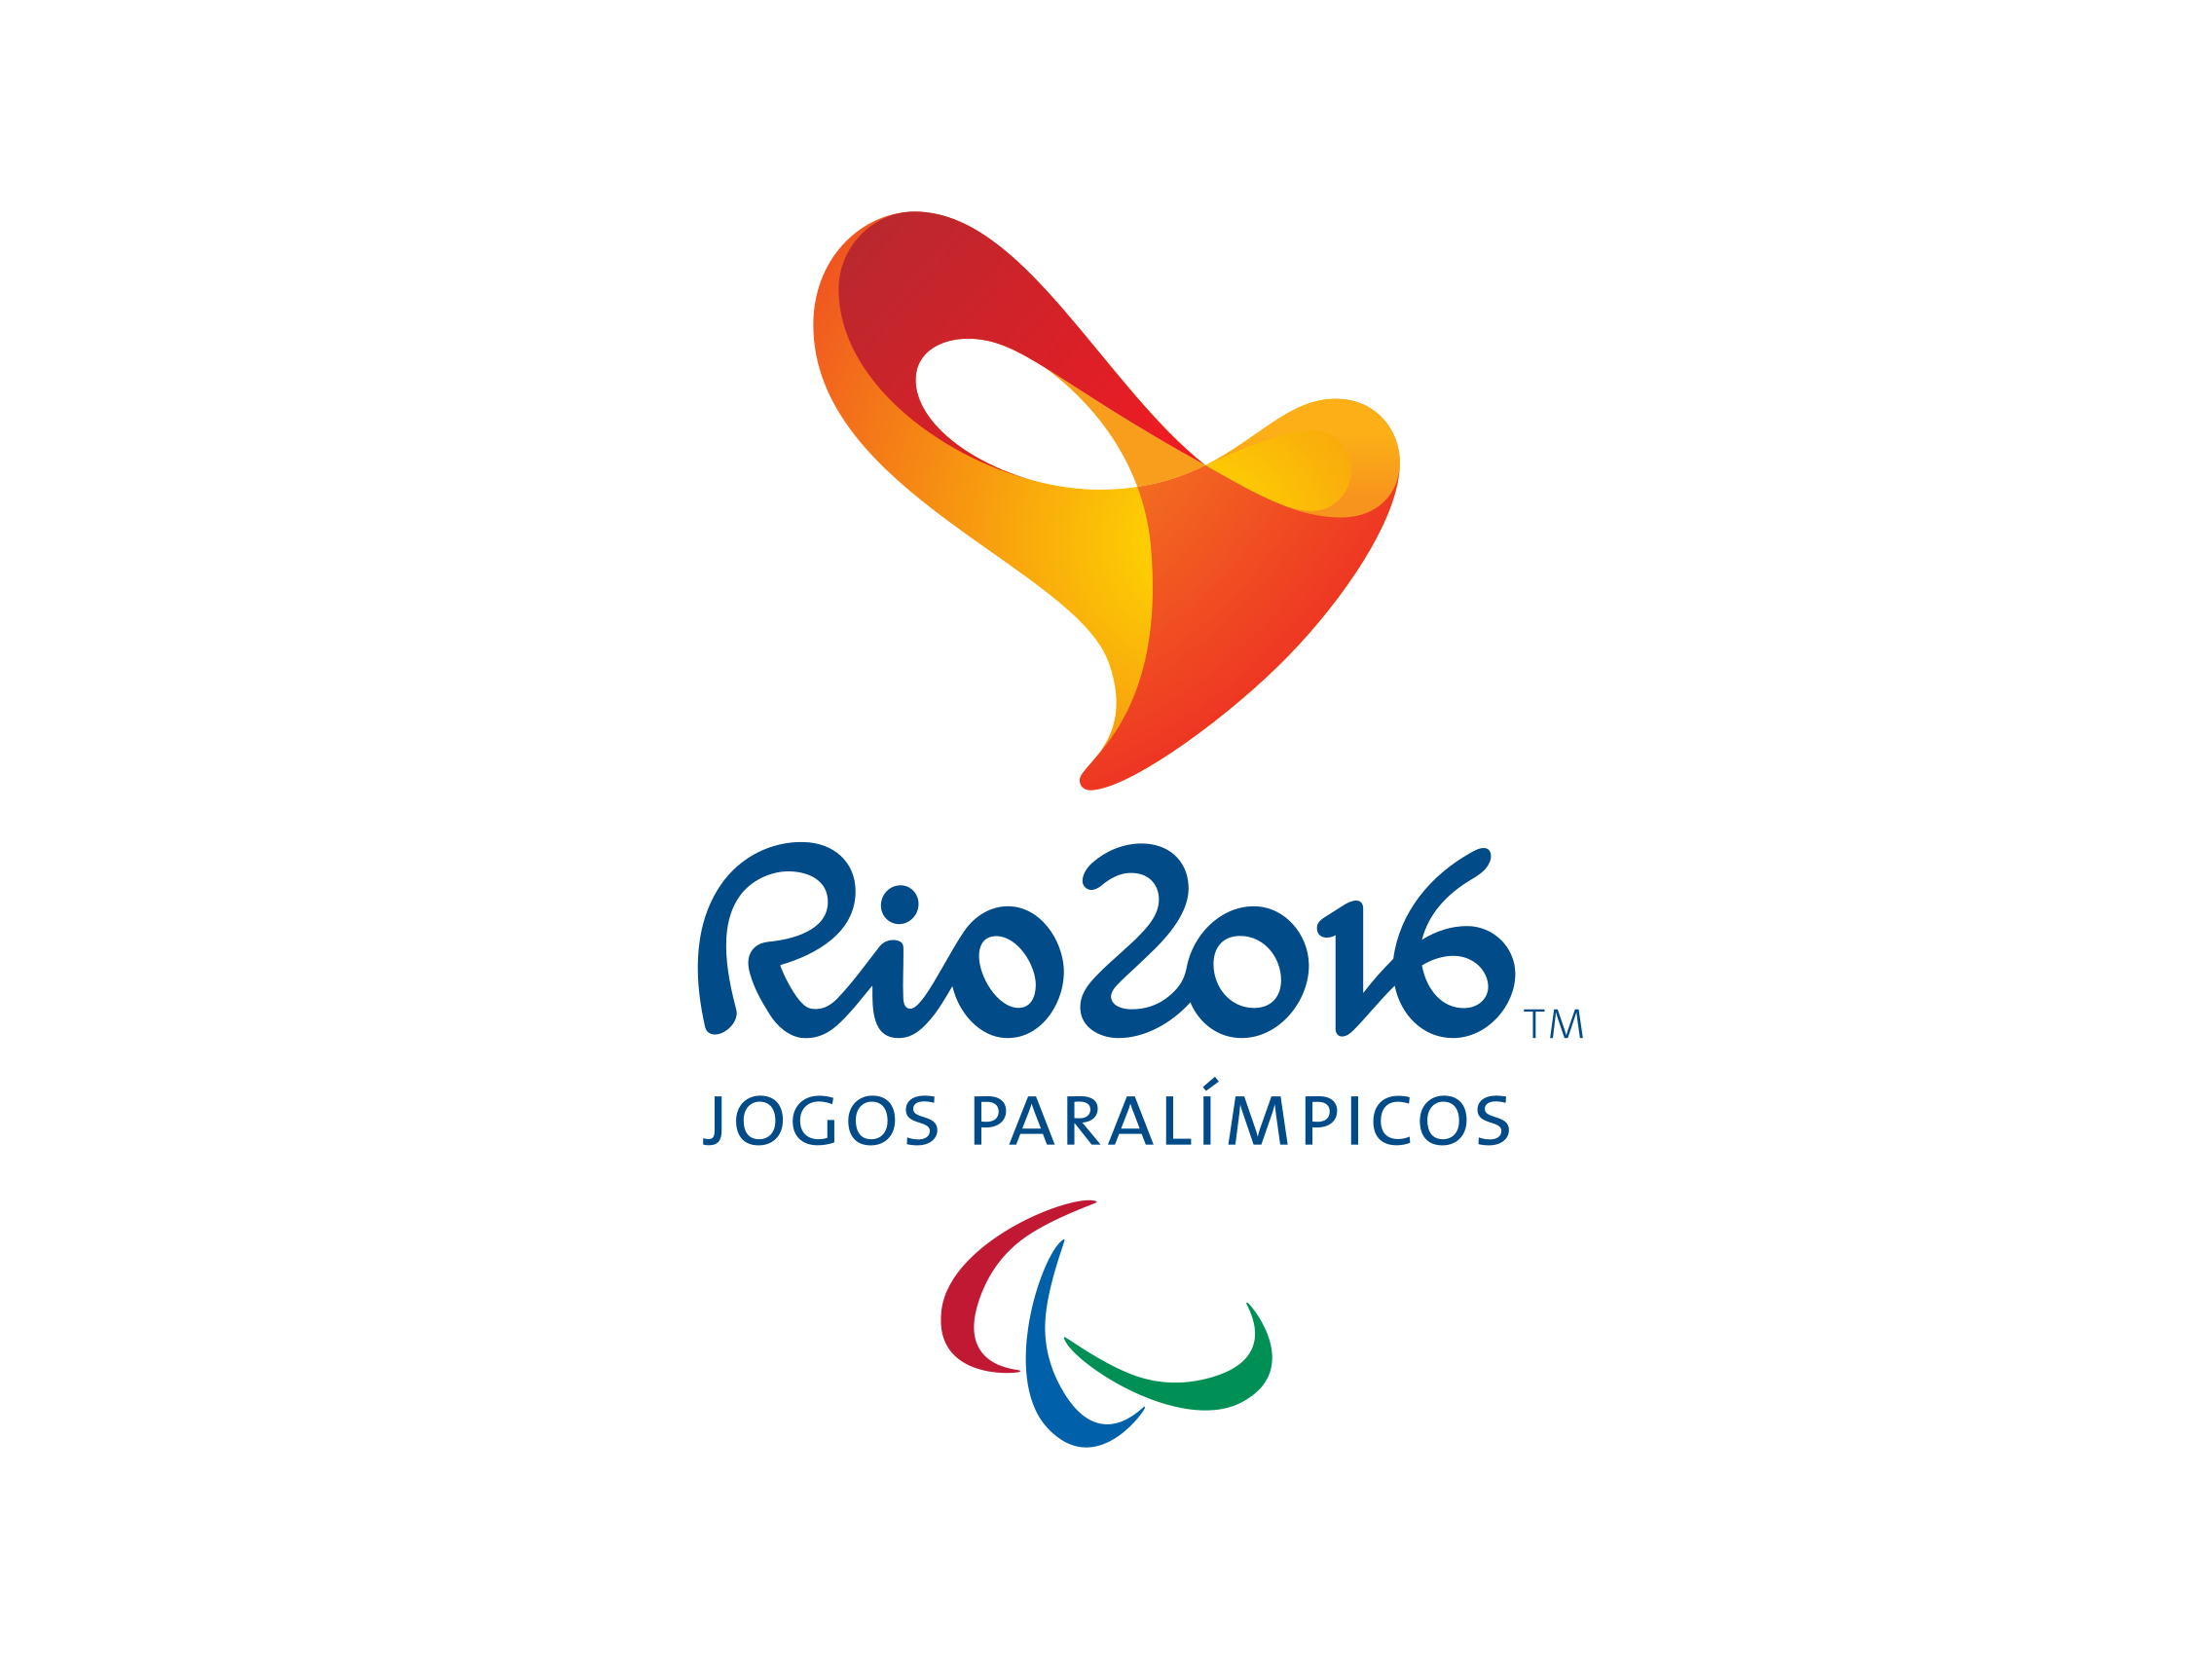 Rio_2016_logo.png